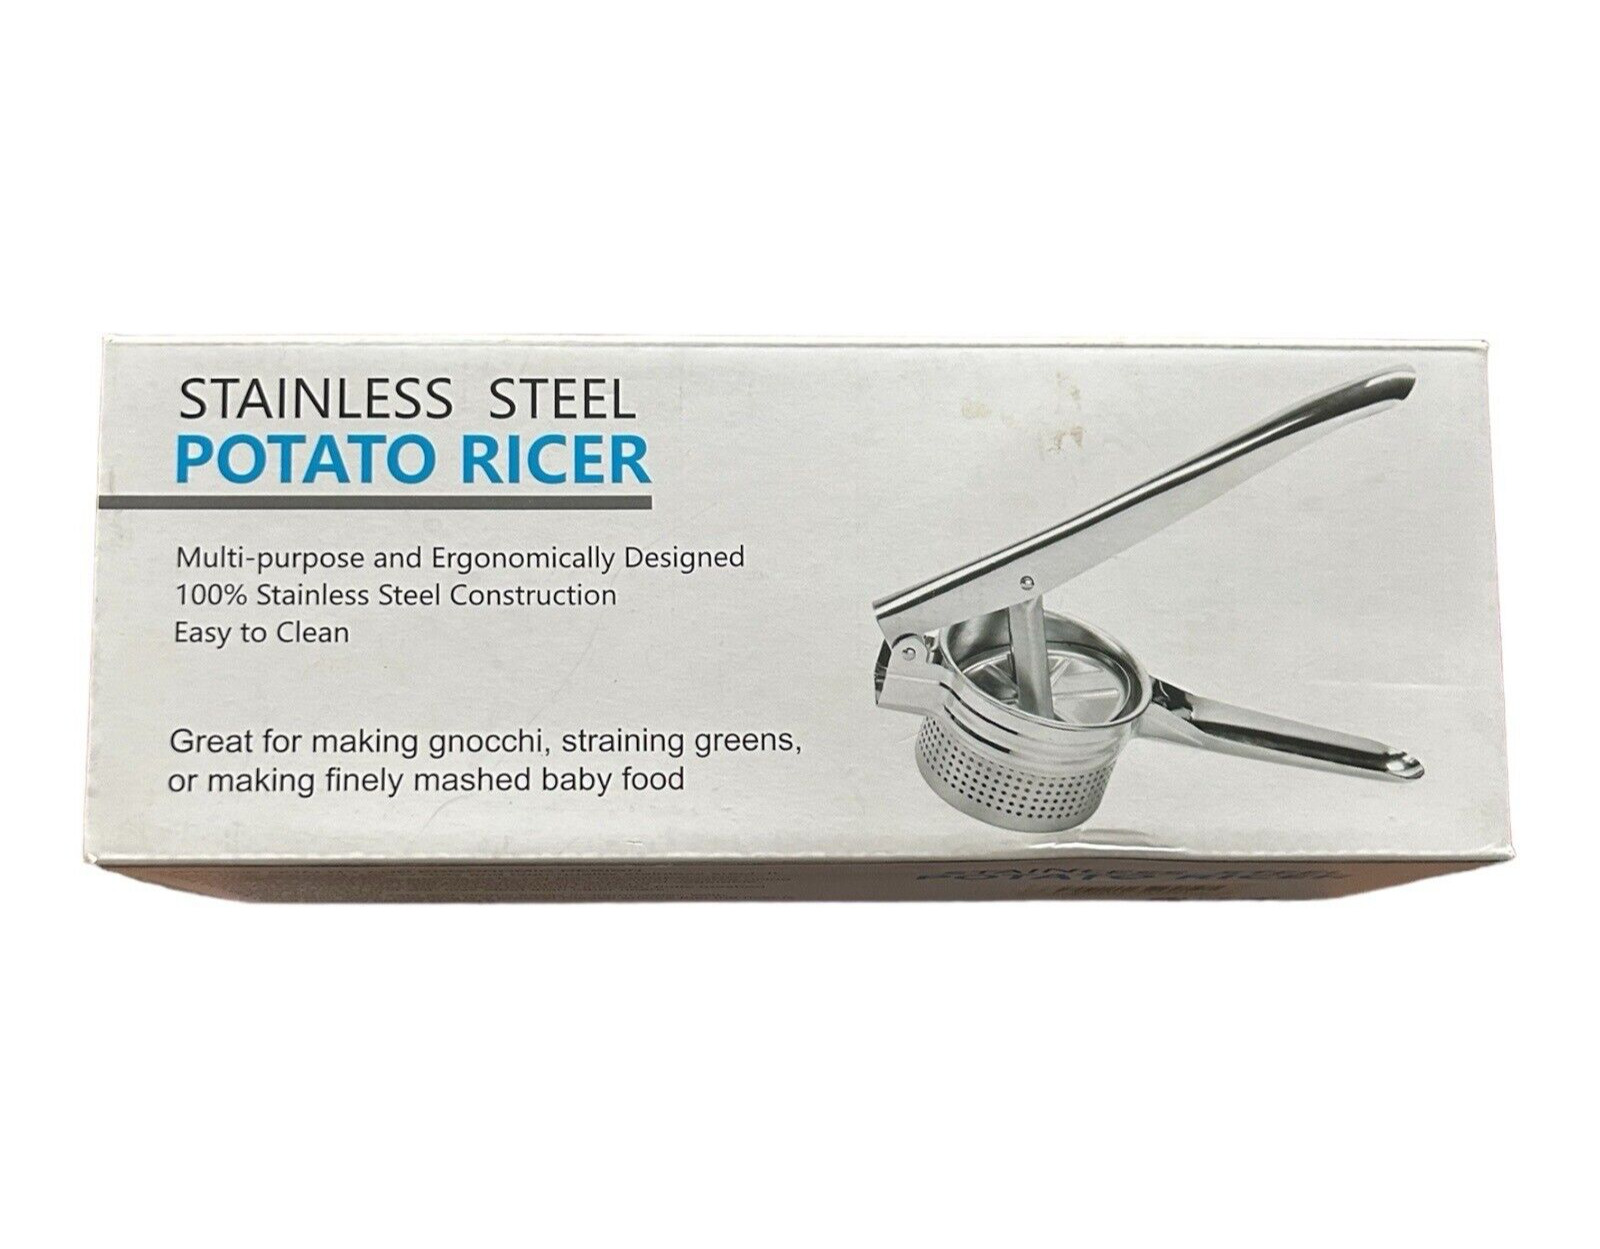 NEW Stainless Steel Potato Ricer Multi Purpose Ergonomic 3 Discs Easy Clean